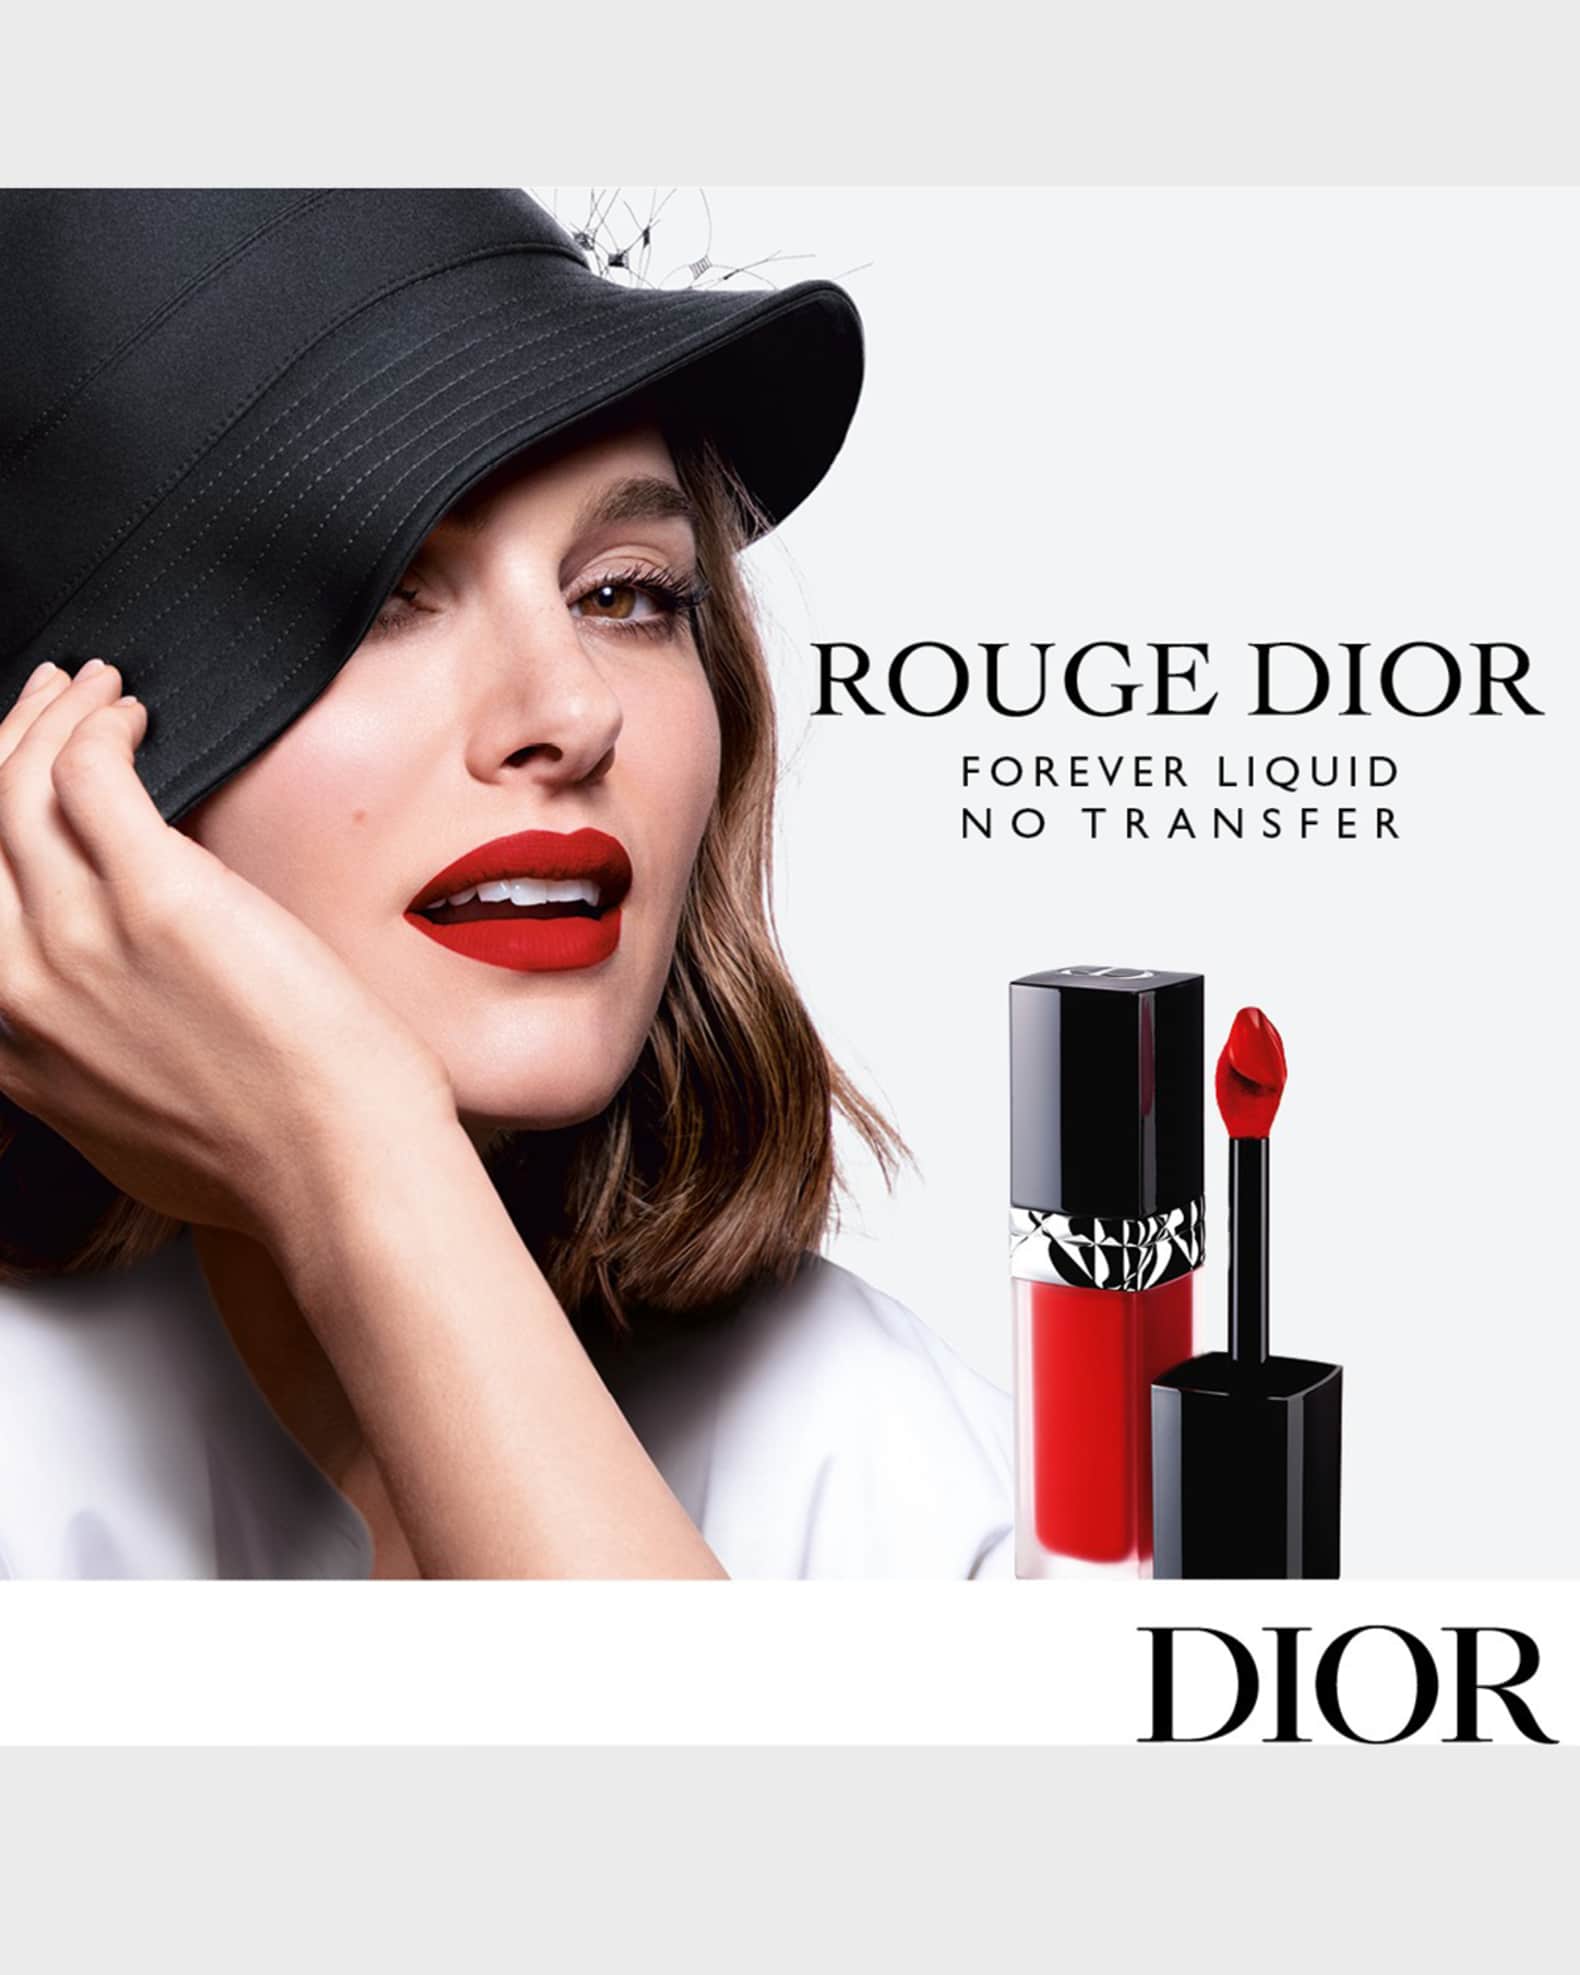 Dior Rouge Dior Forever Liquid Transfer Proof Lipstick Neiman Marcus 